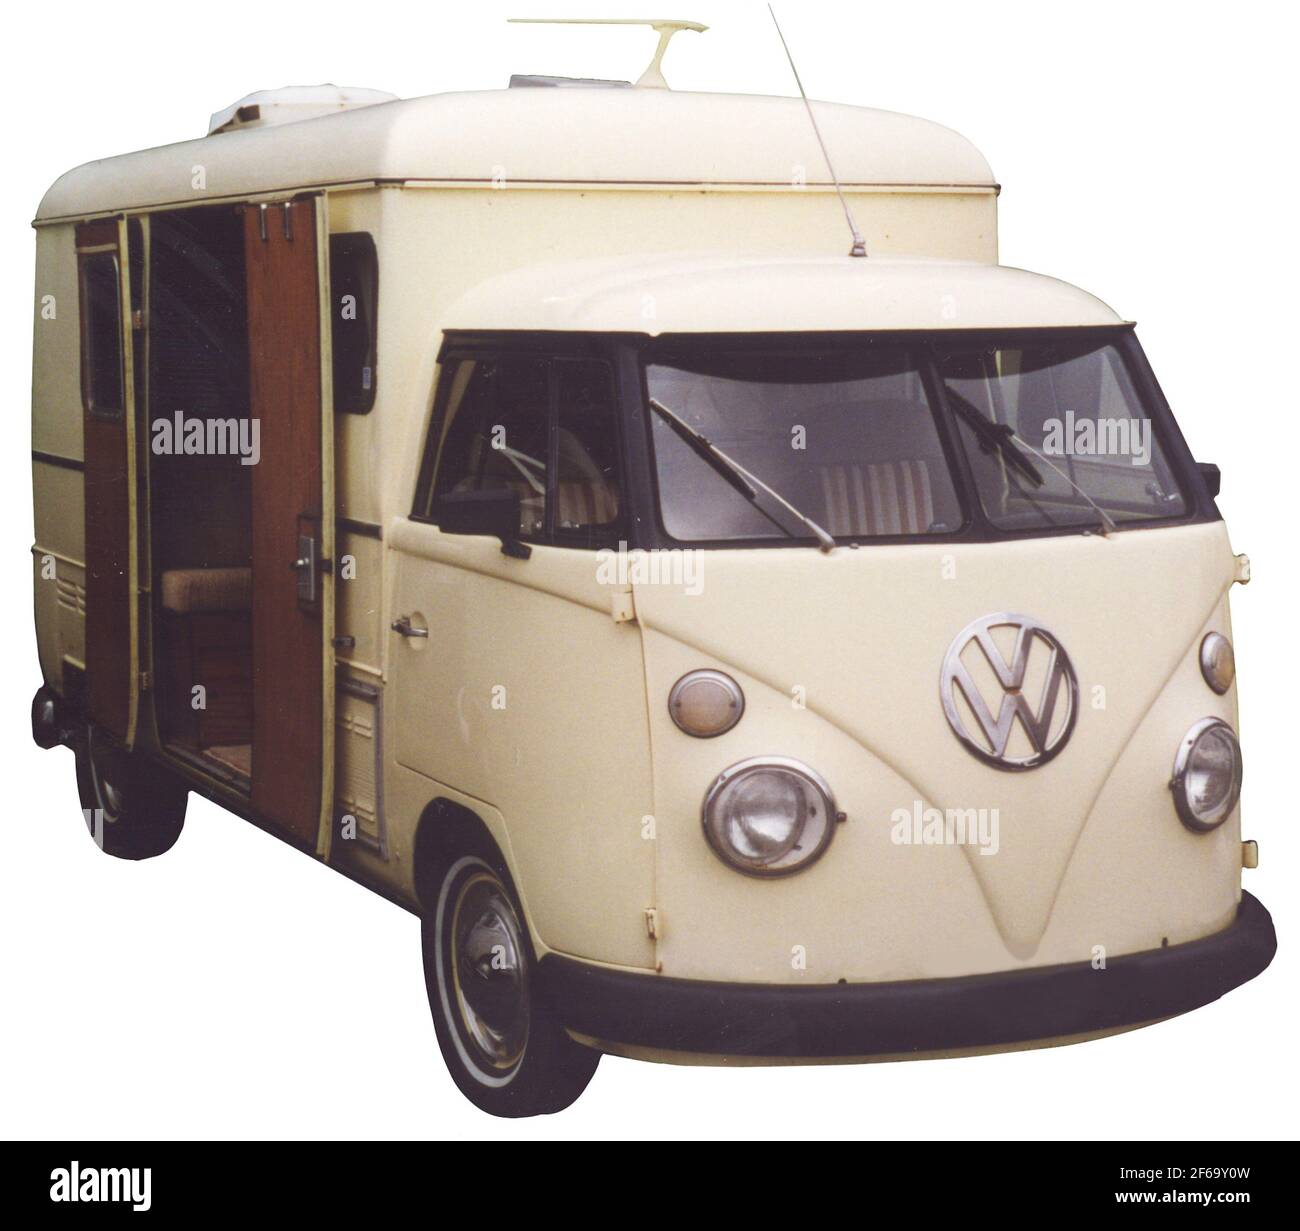 Furgoneta de autocaravana de 1962 VW con techo extensible Fotografía de  stock - Alamy